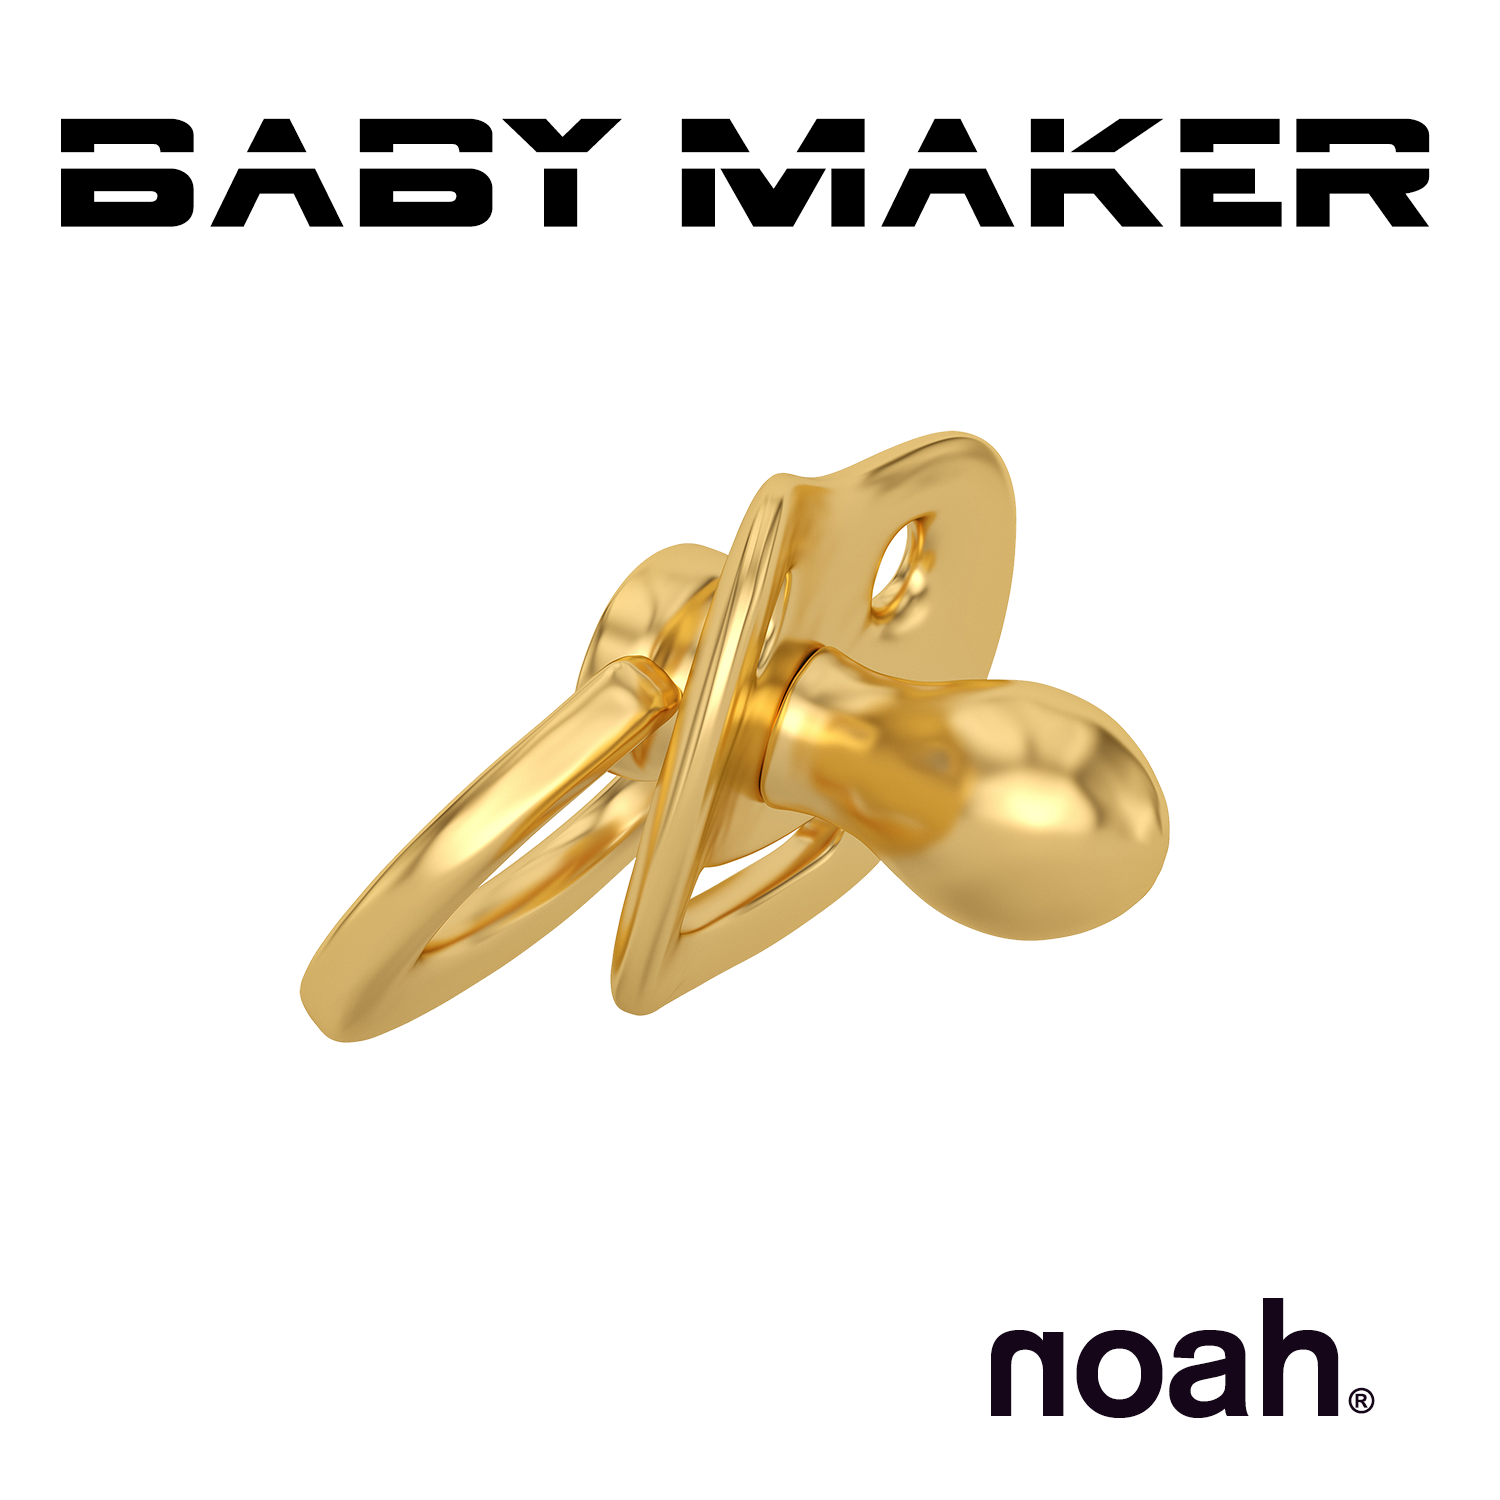 NOAH - BABYMAKER